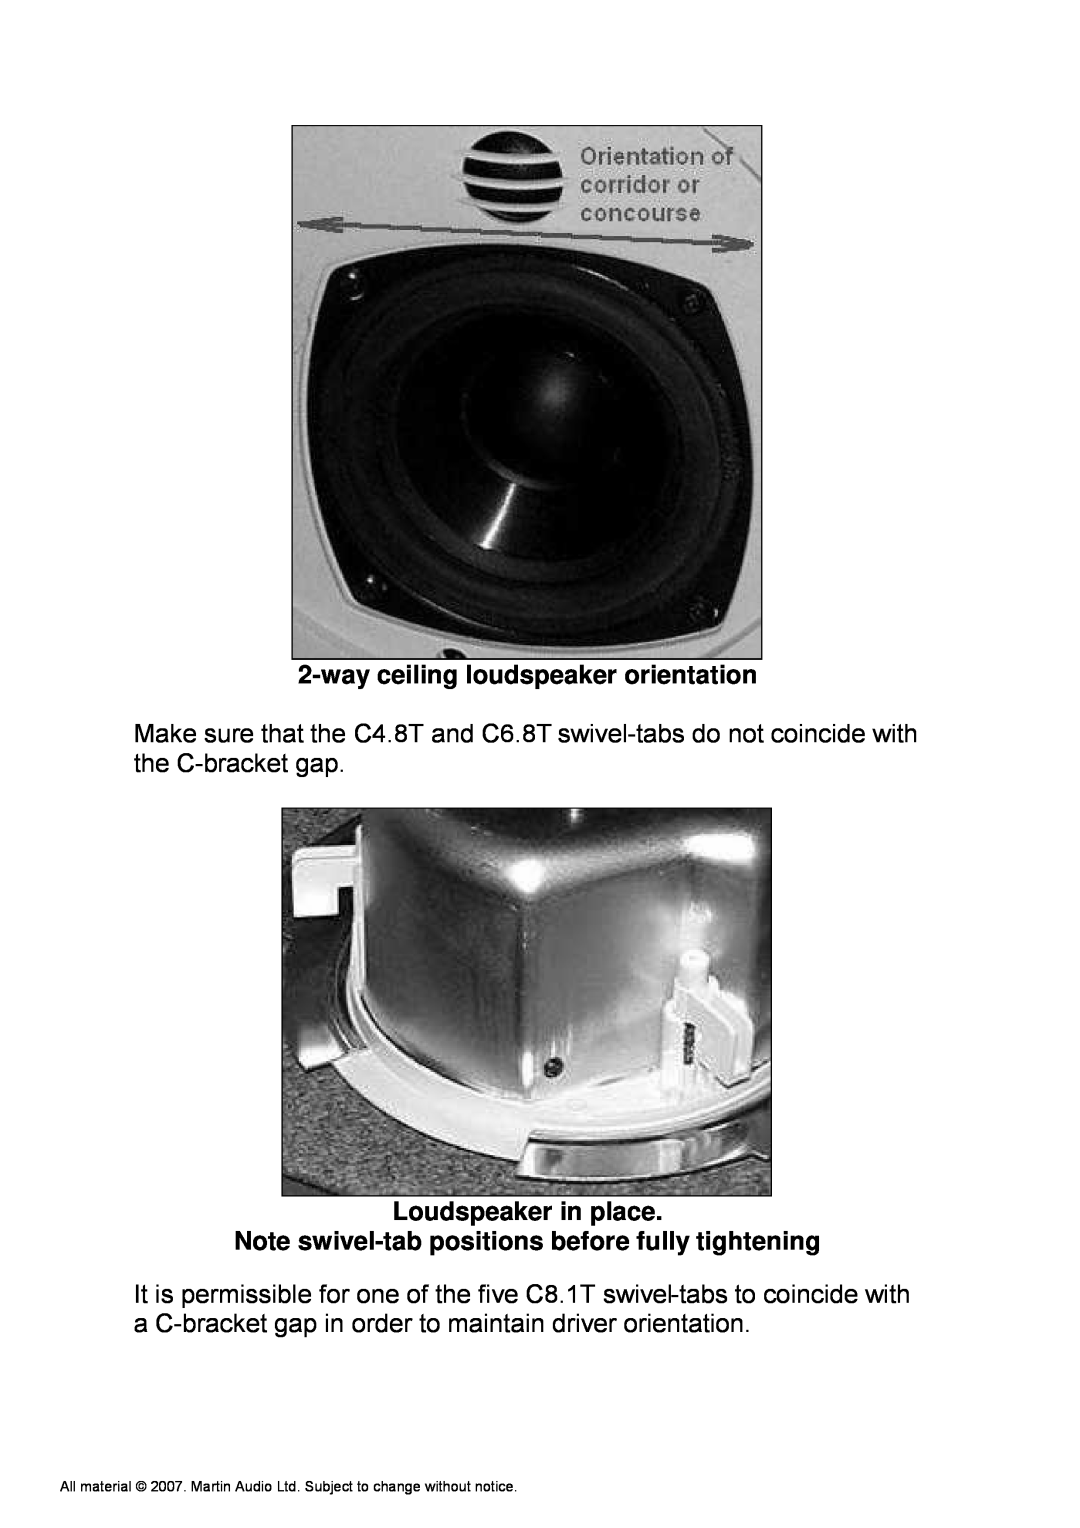 Martin Audio C4.8T, C6.8T, C8.1T manual wayceiling loudspeaker orientation, Loudspeaker in place 